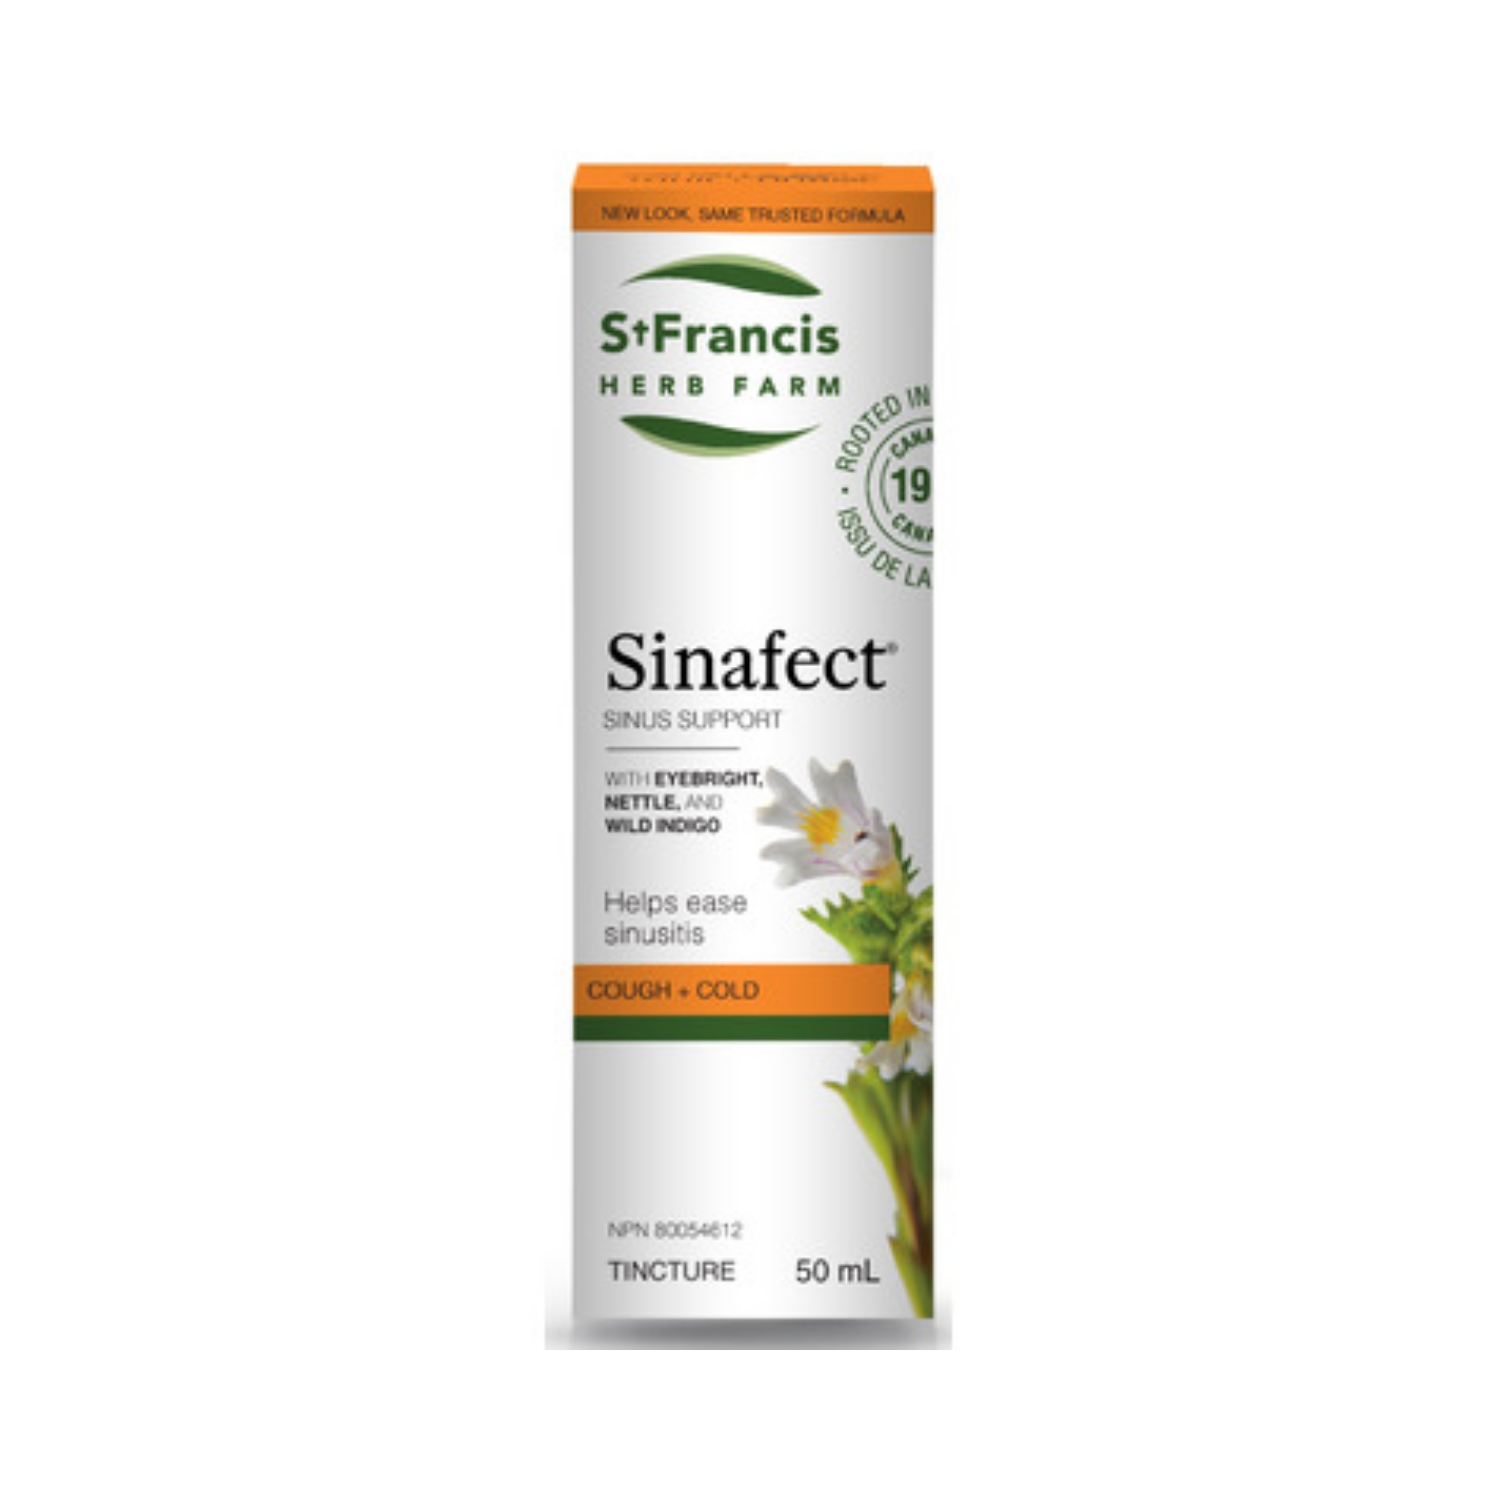 St. Francis Sinafect Sinus Support Tincture 50ml